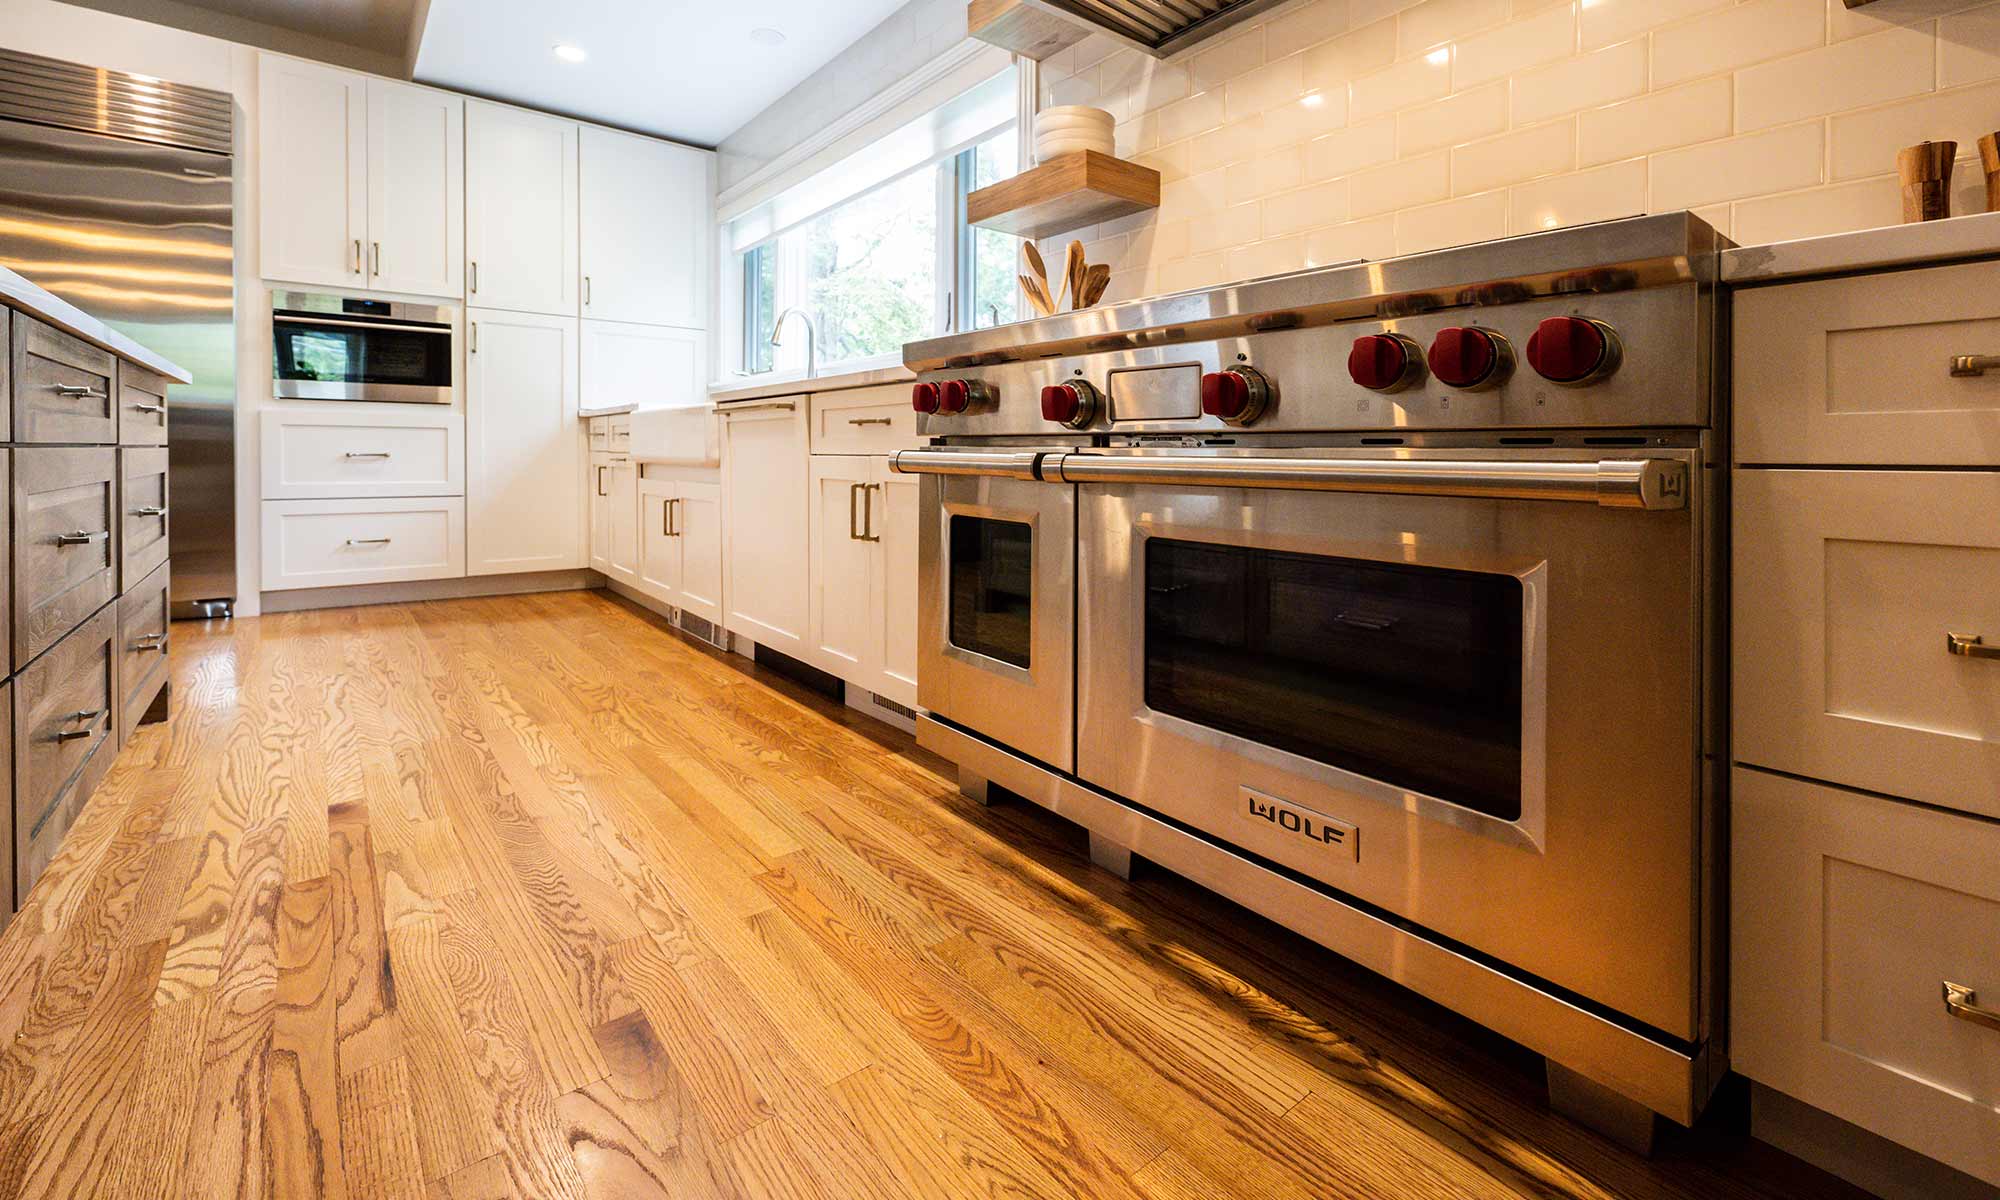 60 inch range in a luxury kitchen renovation